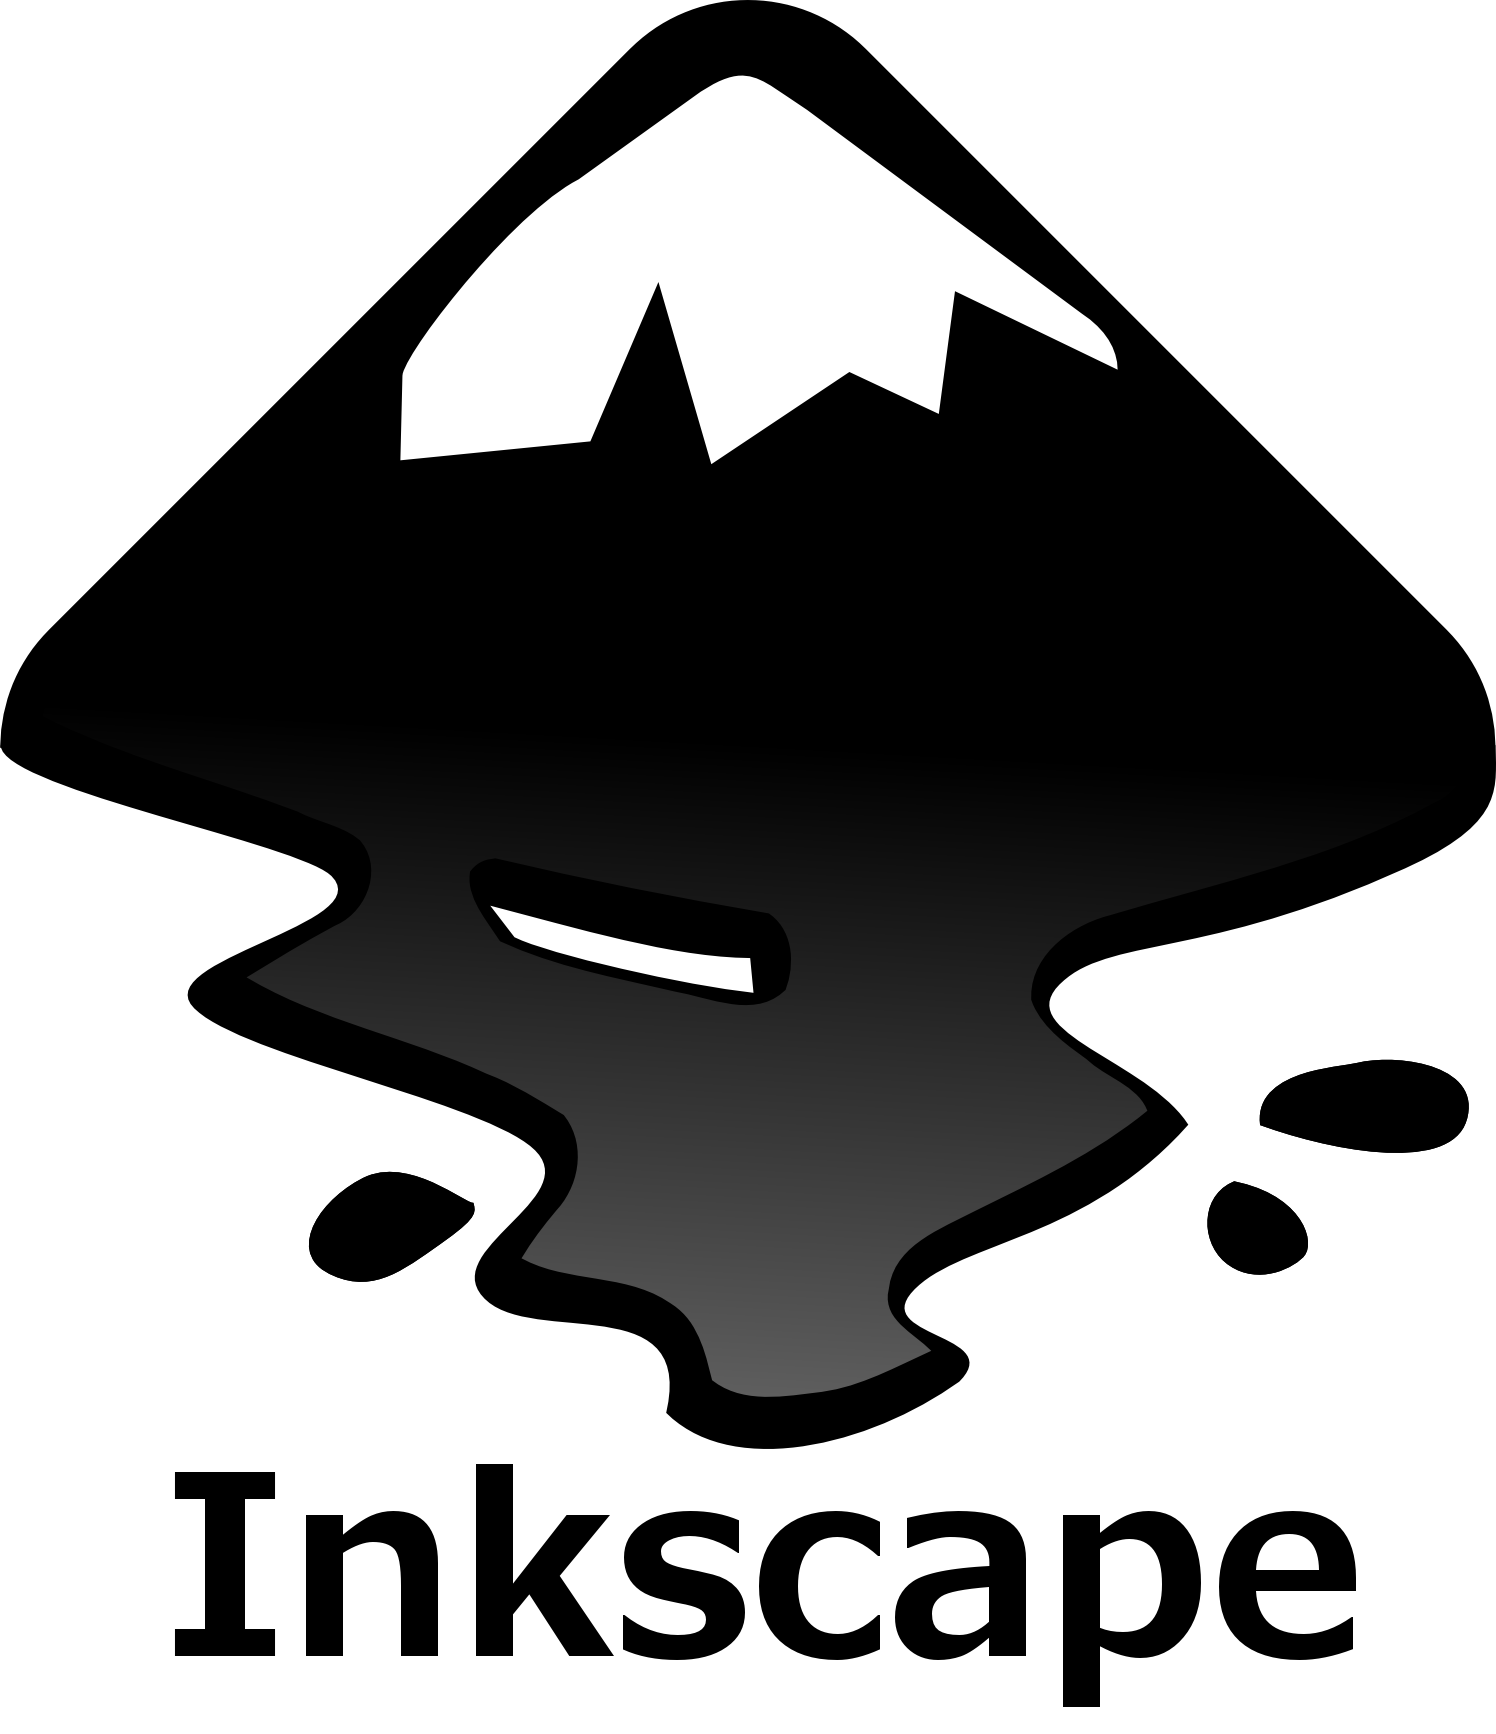 Inkscape Logo - Inkscape Logos